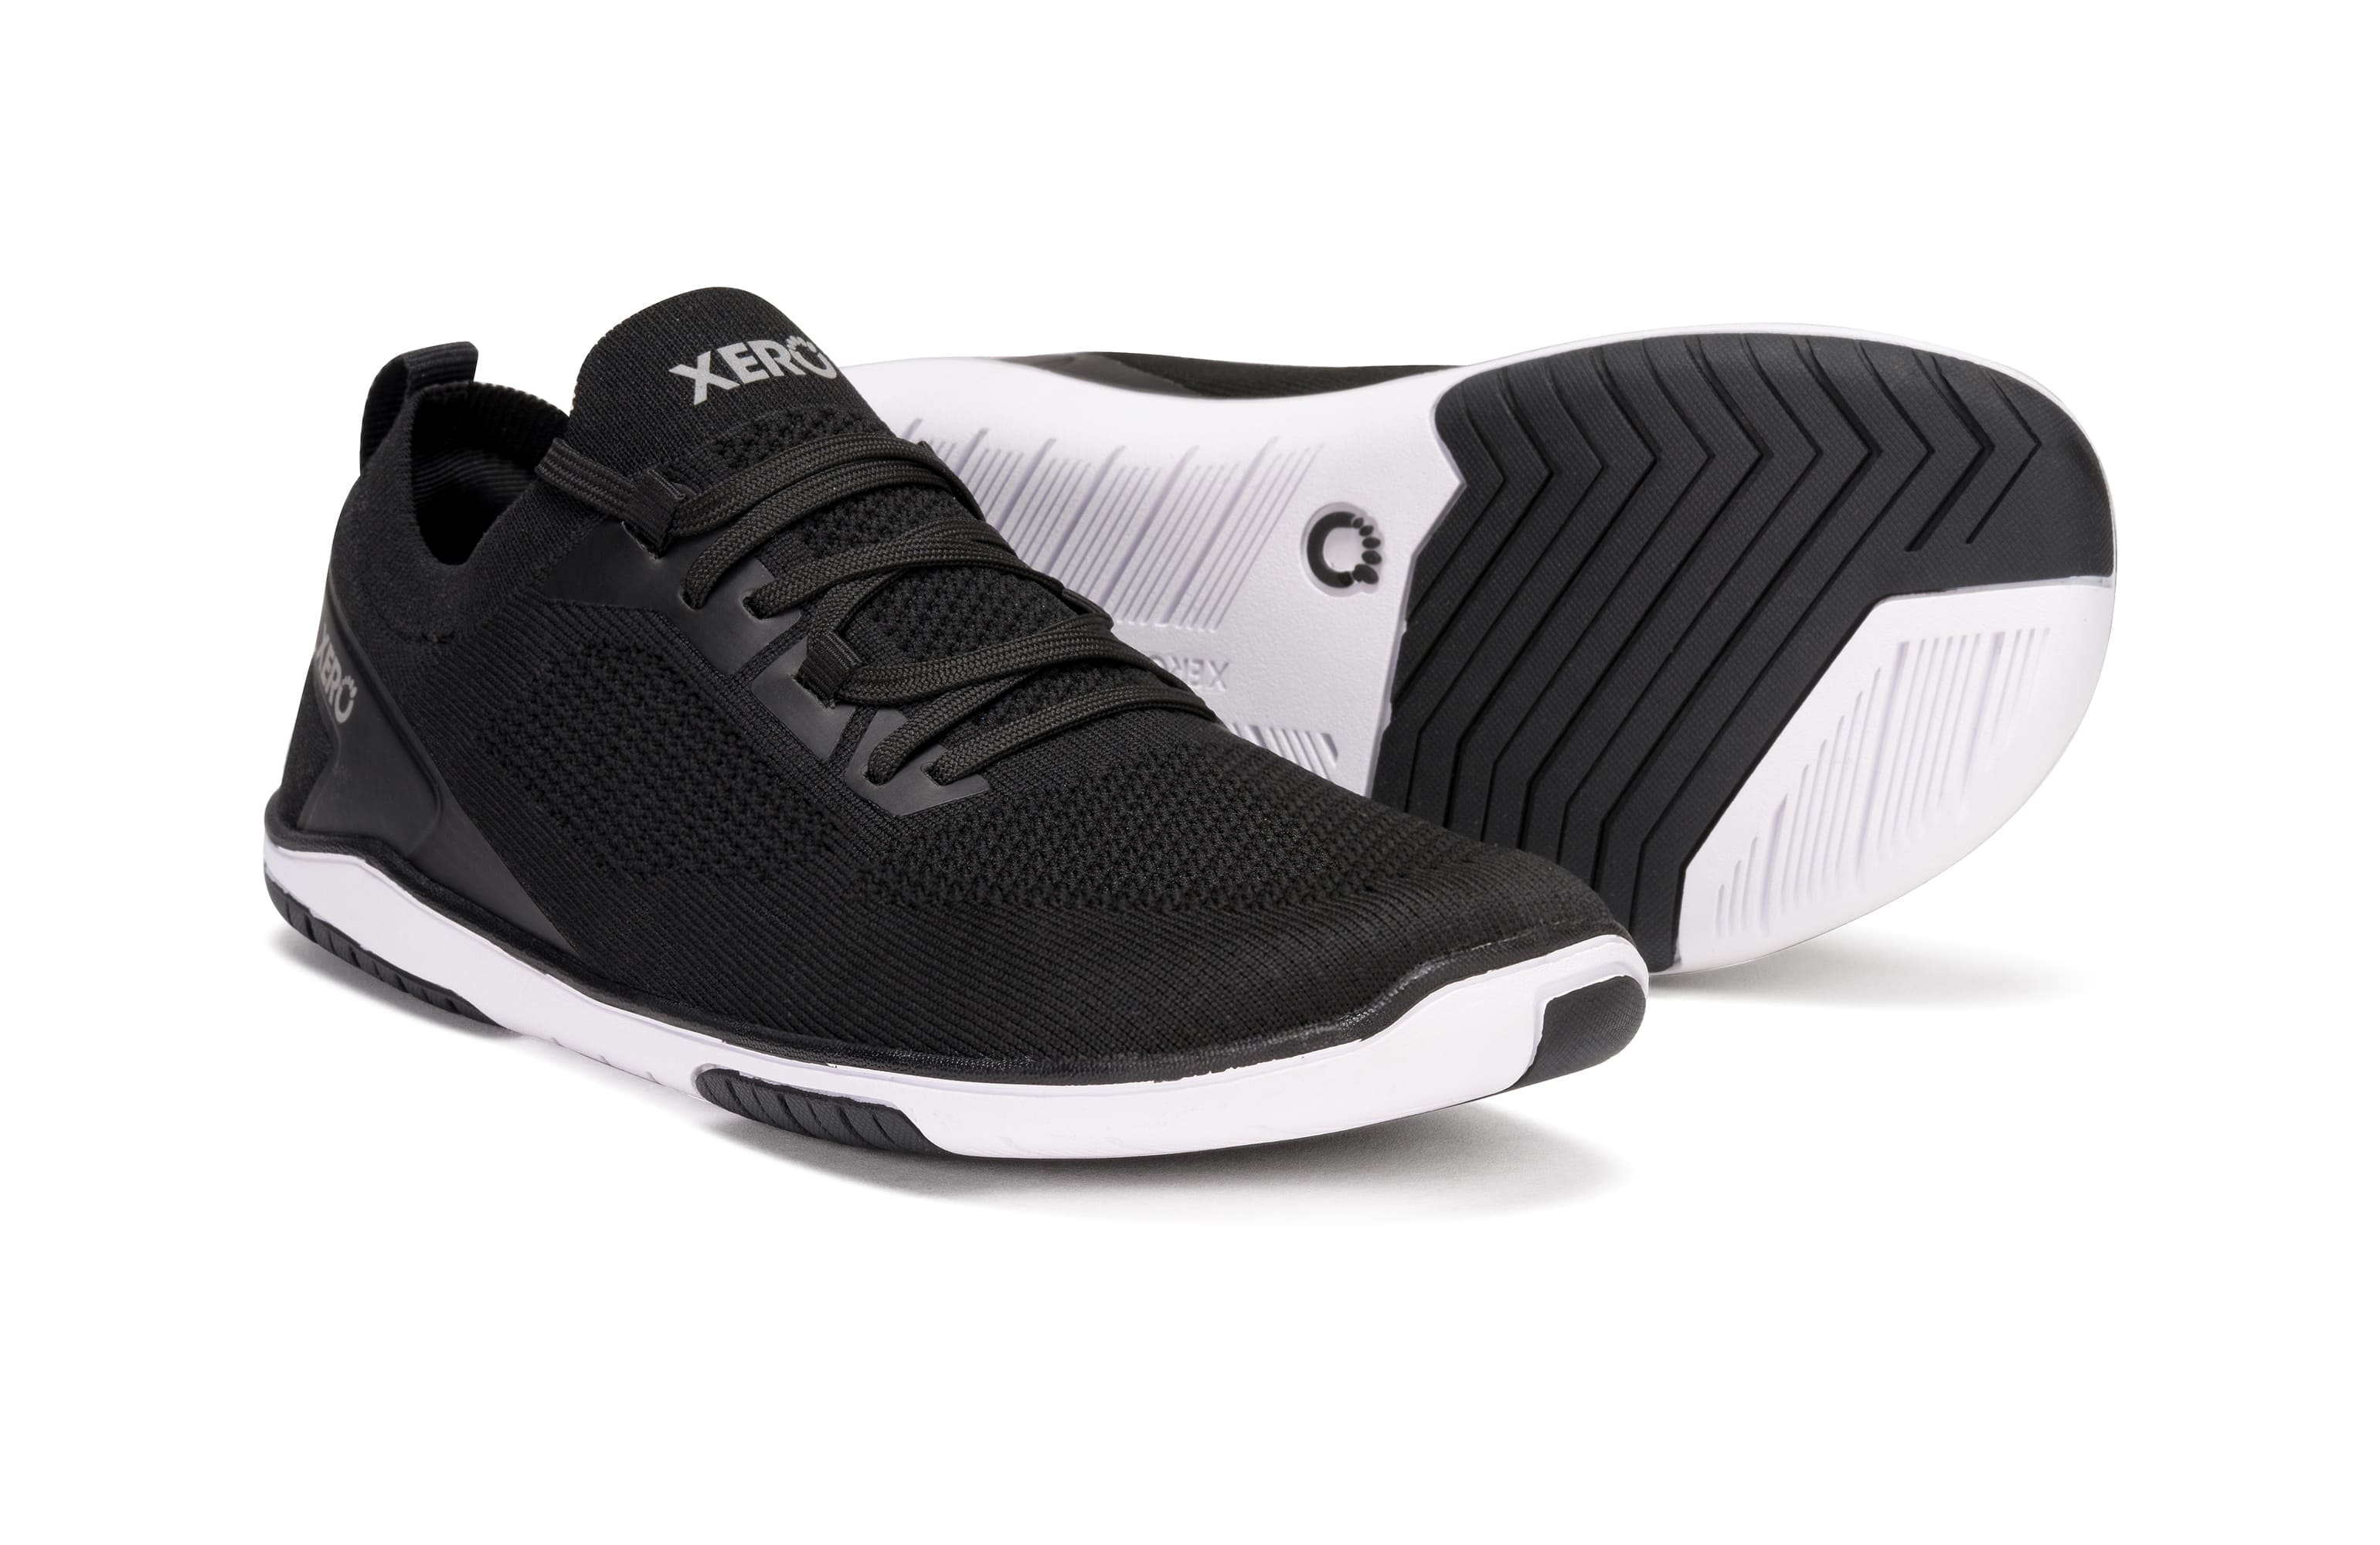 Xero Shoes lanza nuevo calzado barefoot para correr, hacer